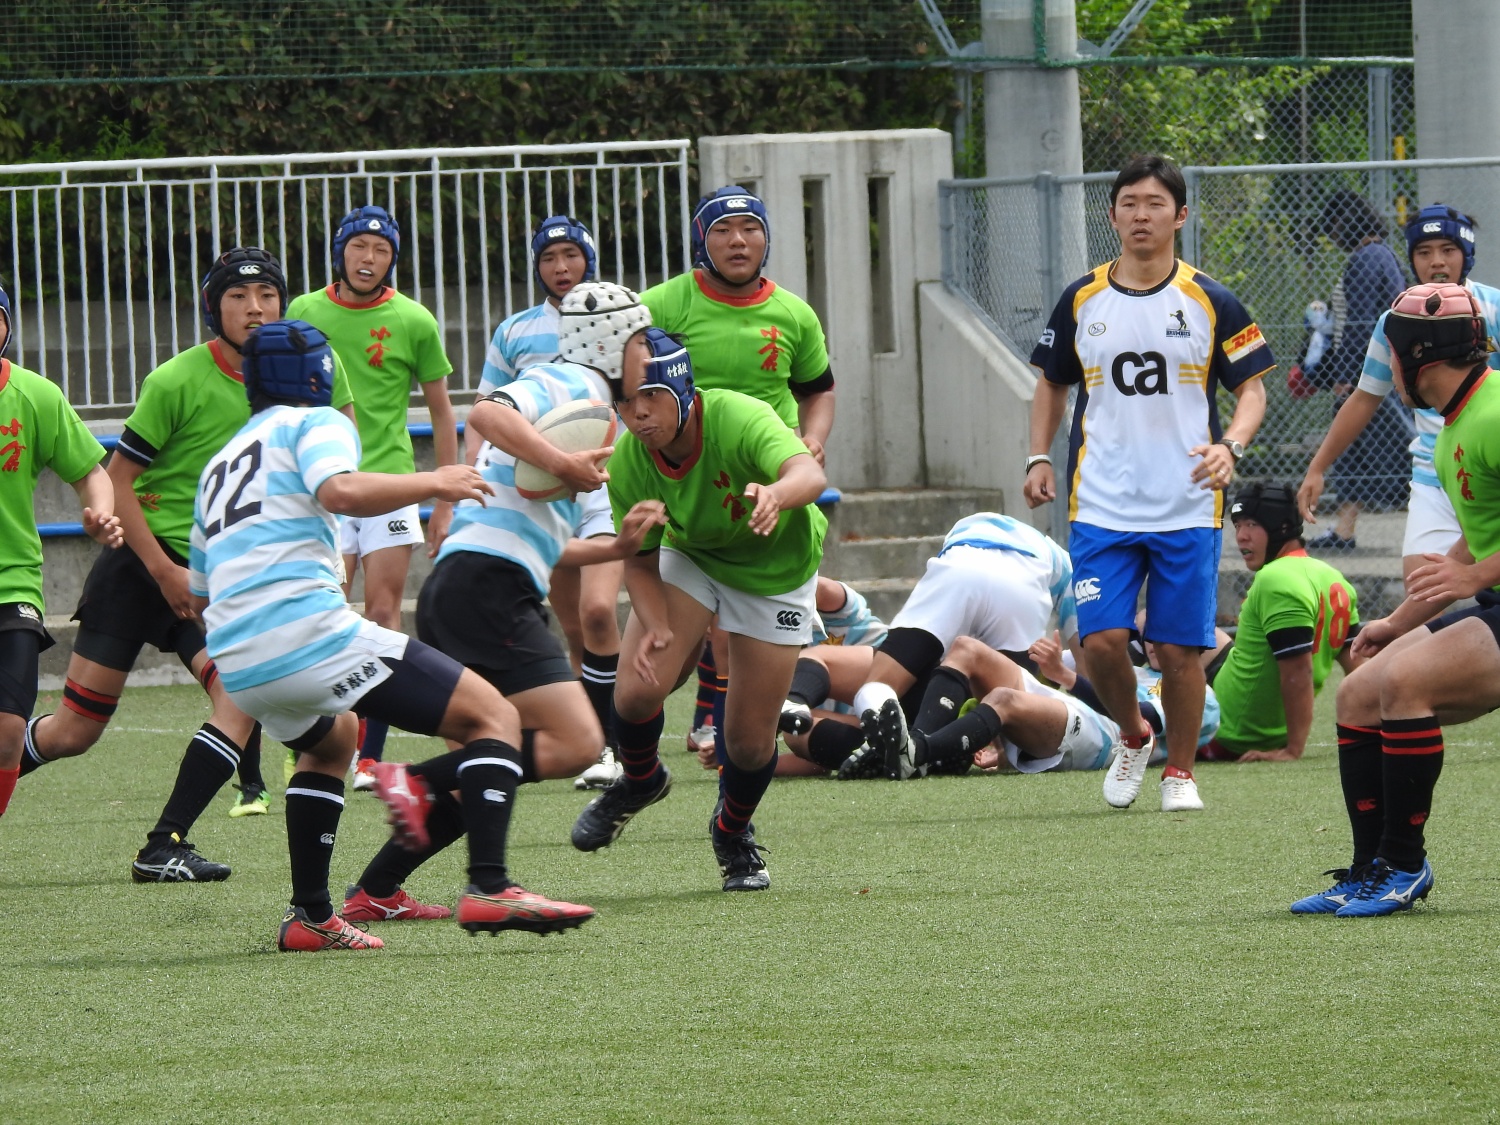 http://kokura-rugby.sakura.ne.jp/e0029_xlarge.jpg